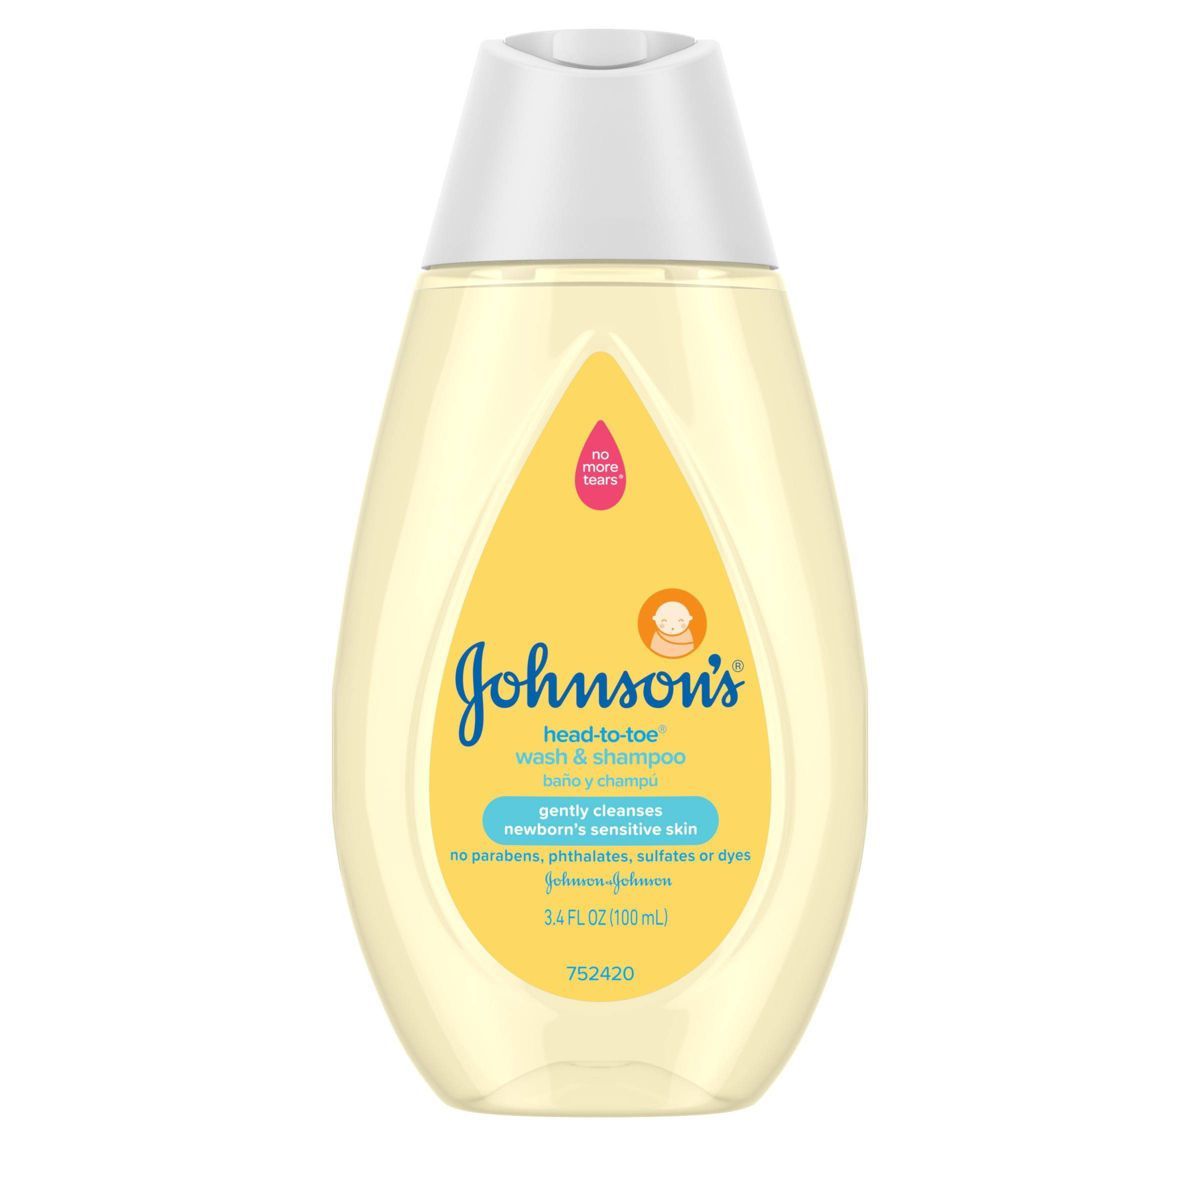 Johnson's Head-To-Toe Gentle Baby Body Wash & Shampoo, Travel Size - 3.4 fl oz | Target